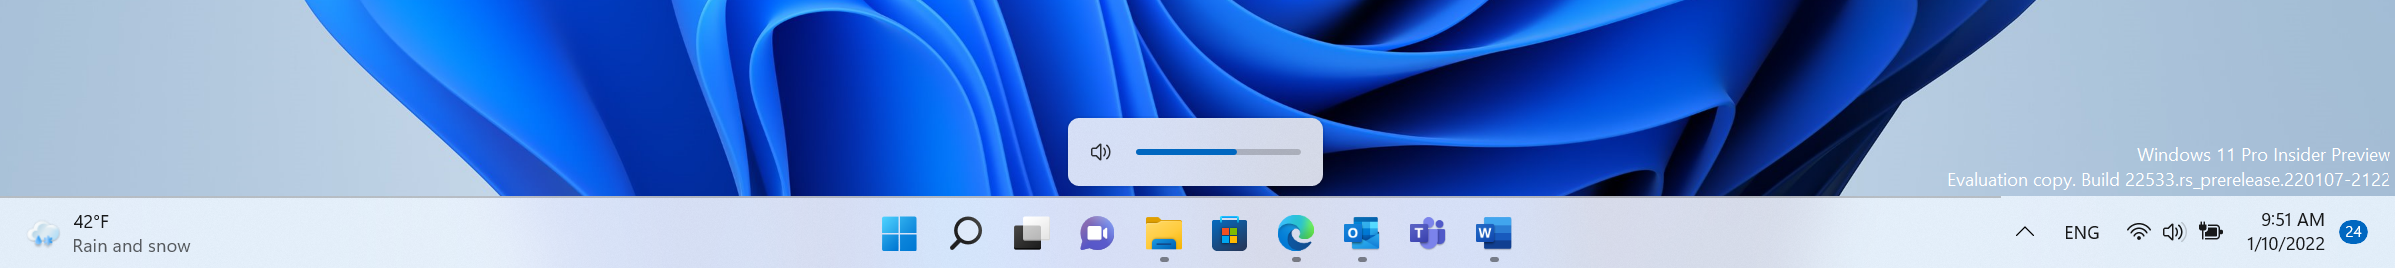 Windows 11 volume indicator